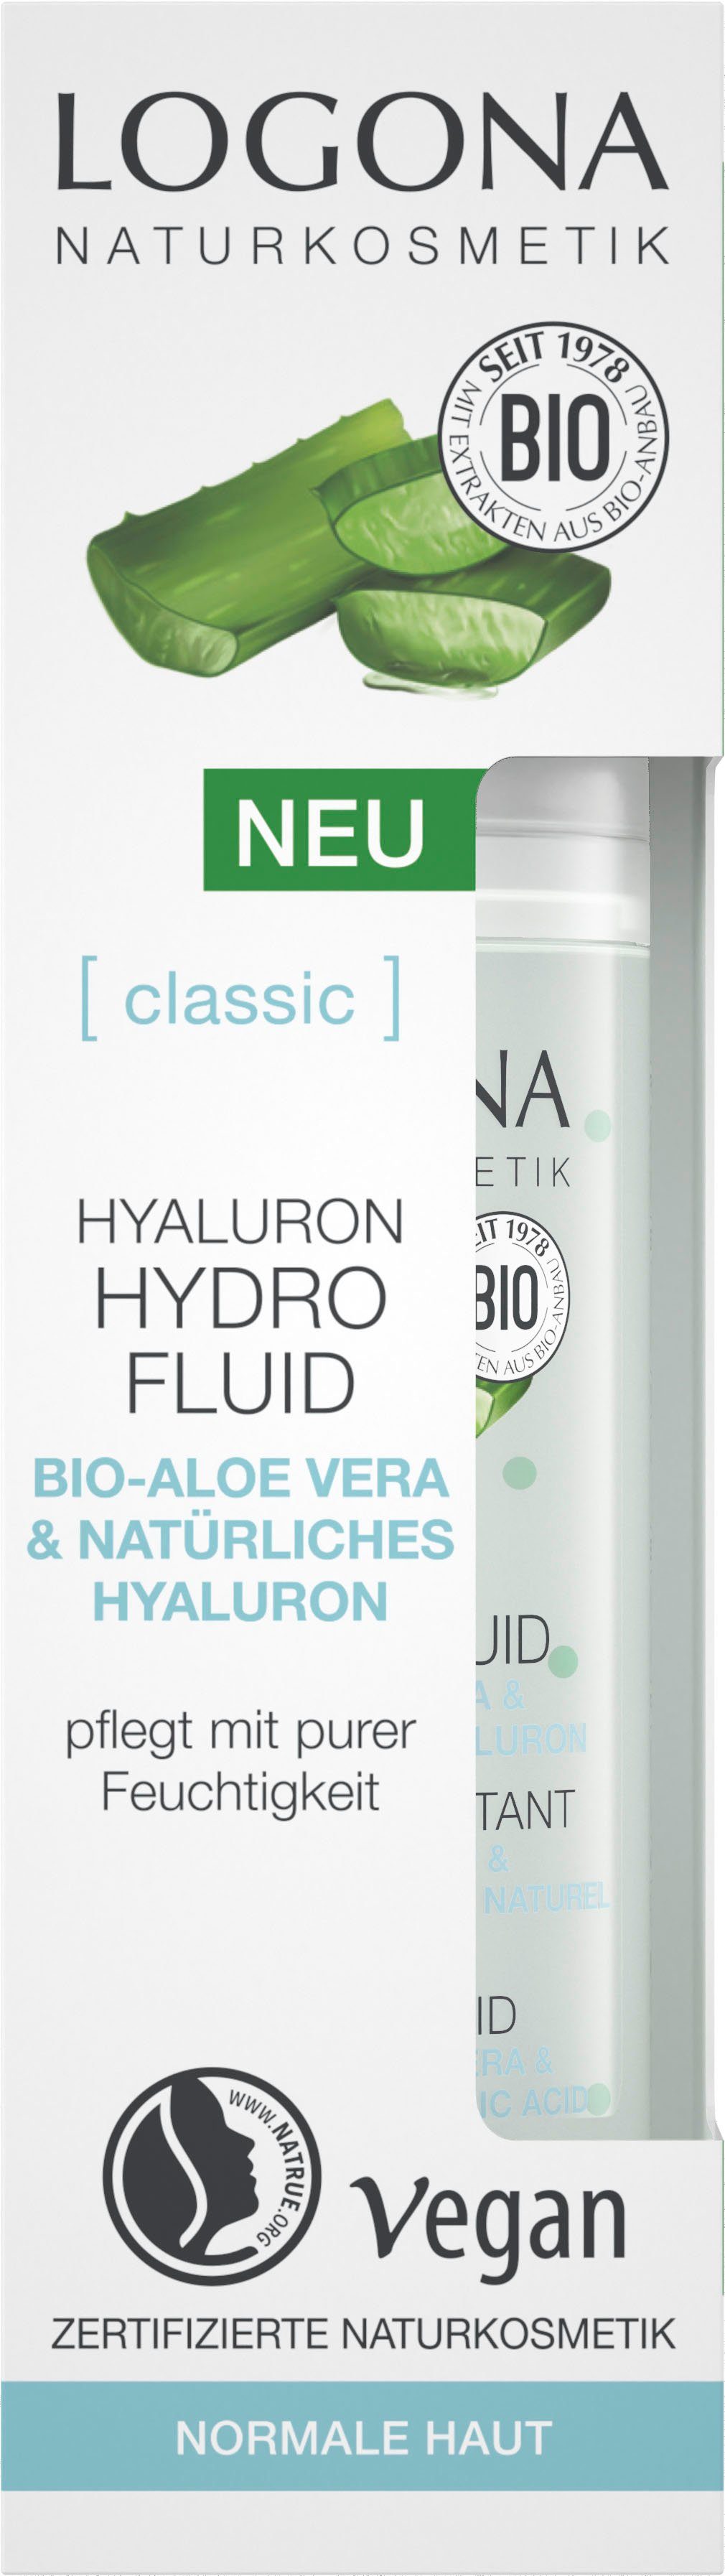 LOGONA Gesichtsfluid Logona Hyaluron Hydro [classic] Fluid